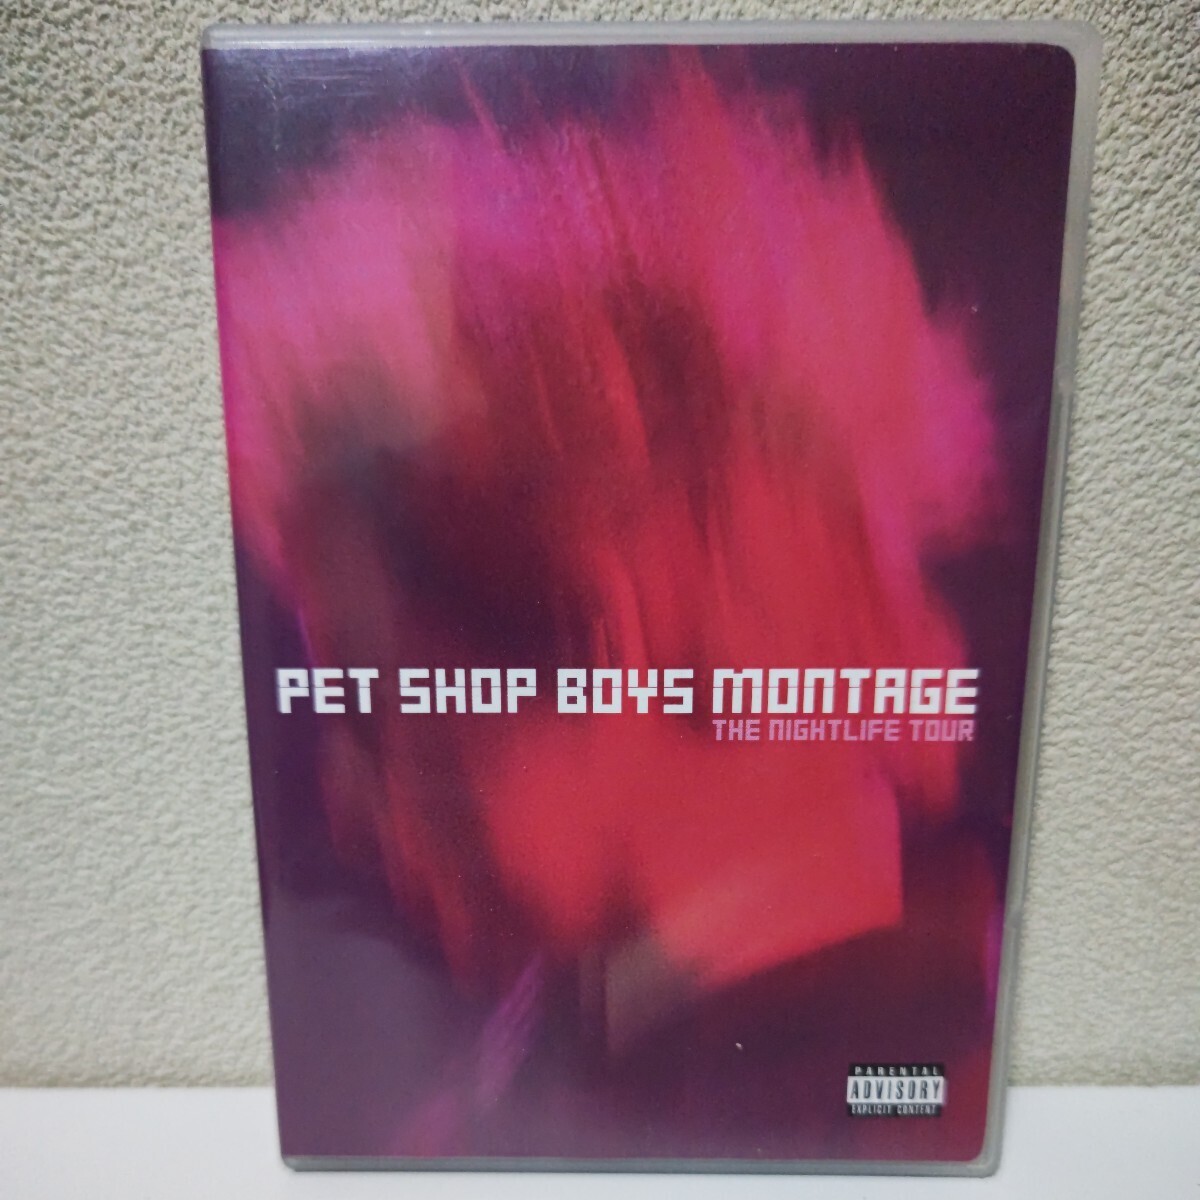 PFT SHOP BOYS/Montage The Nightlife Tour зарубежная запись DVD домашнее животное * магазин * boys 